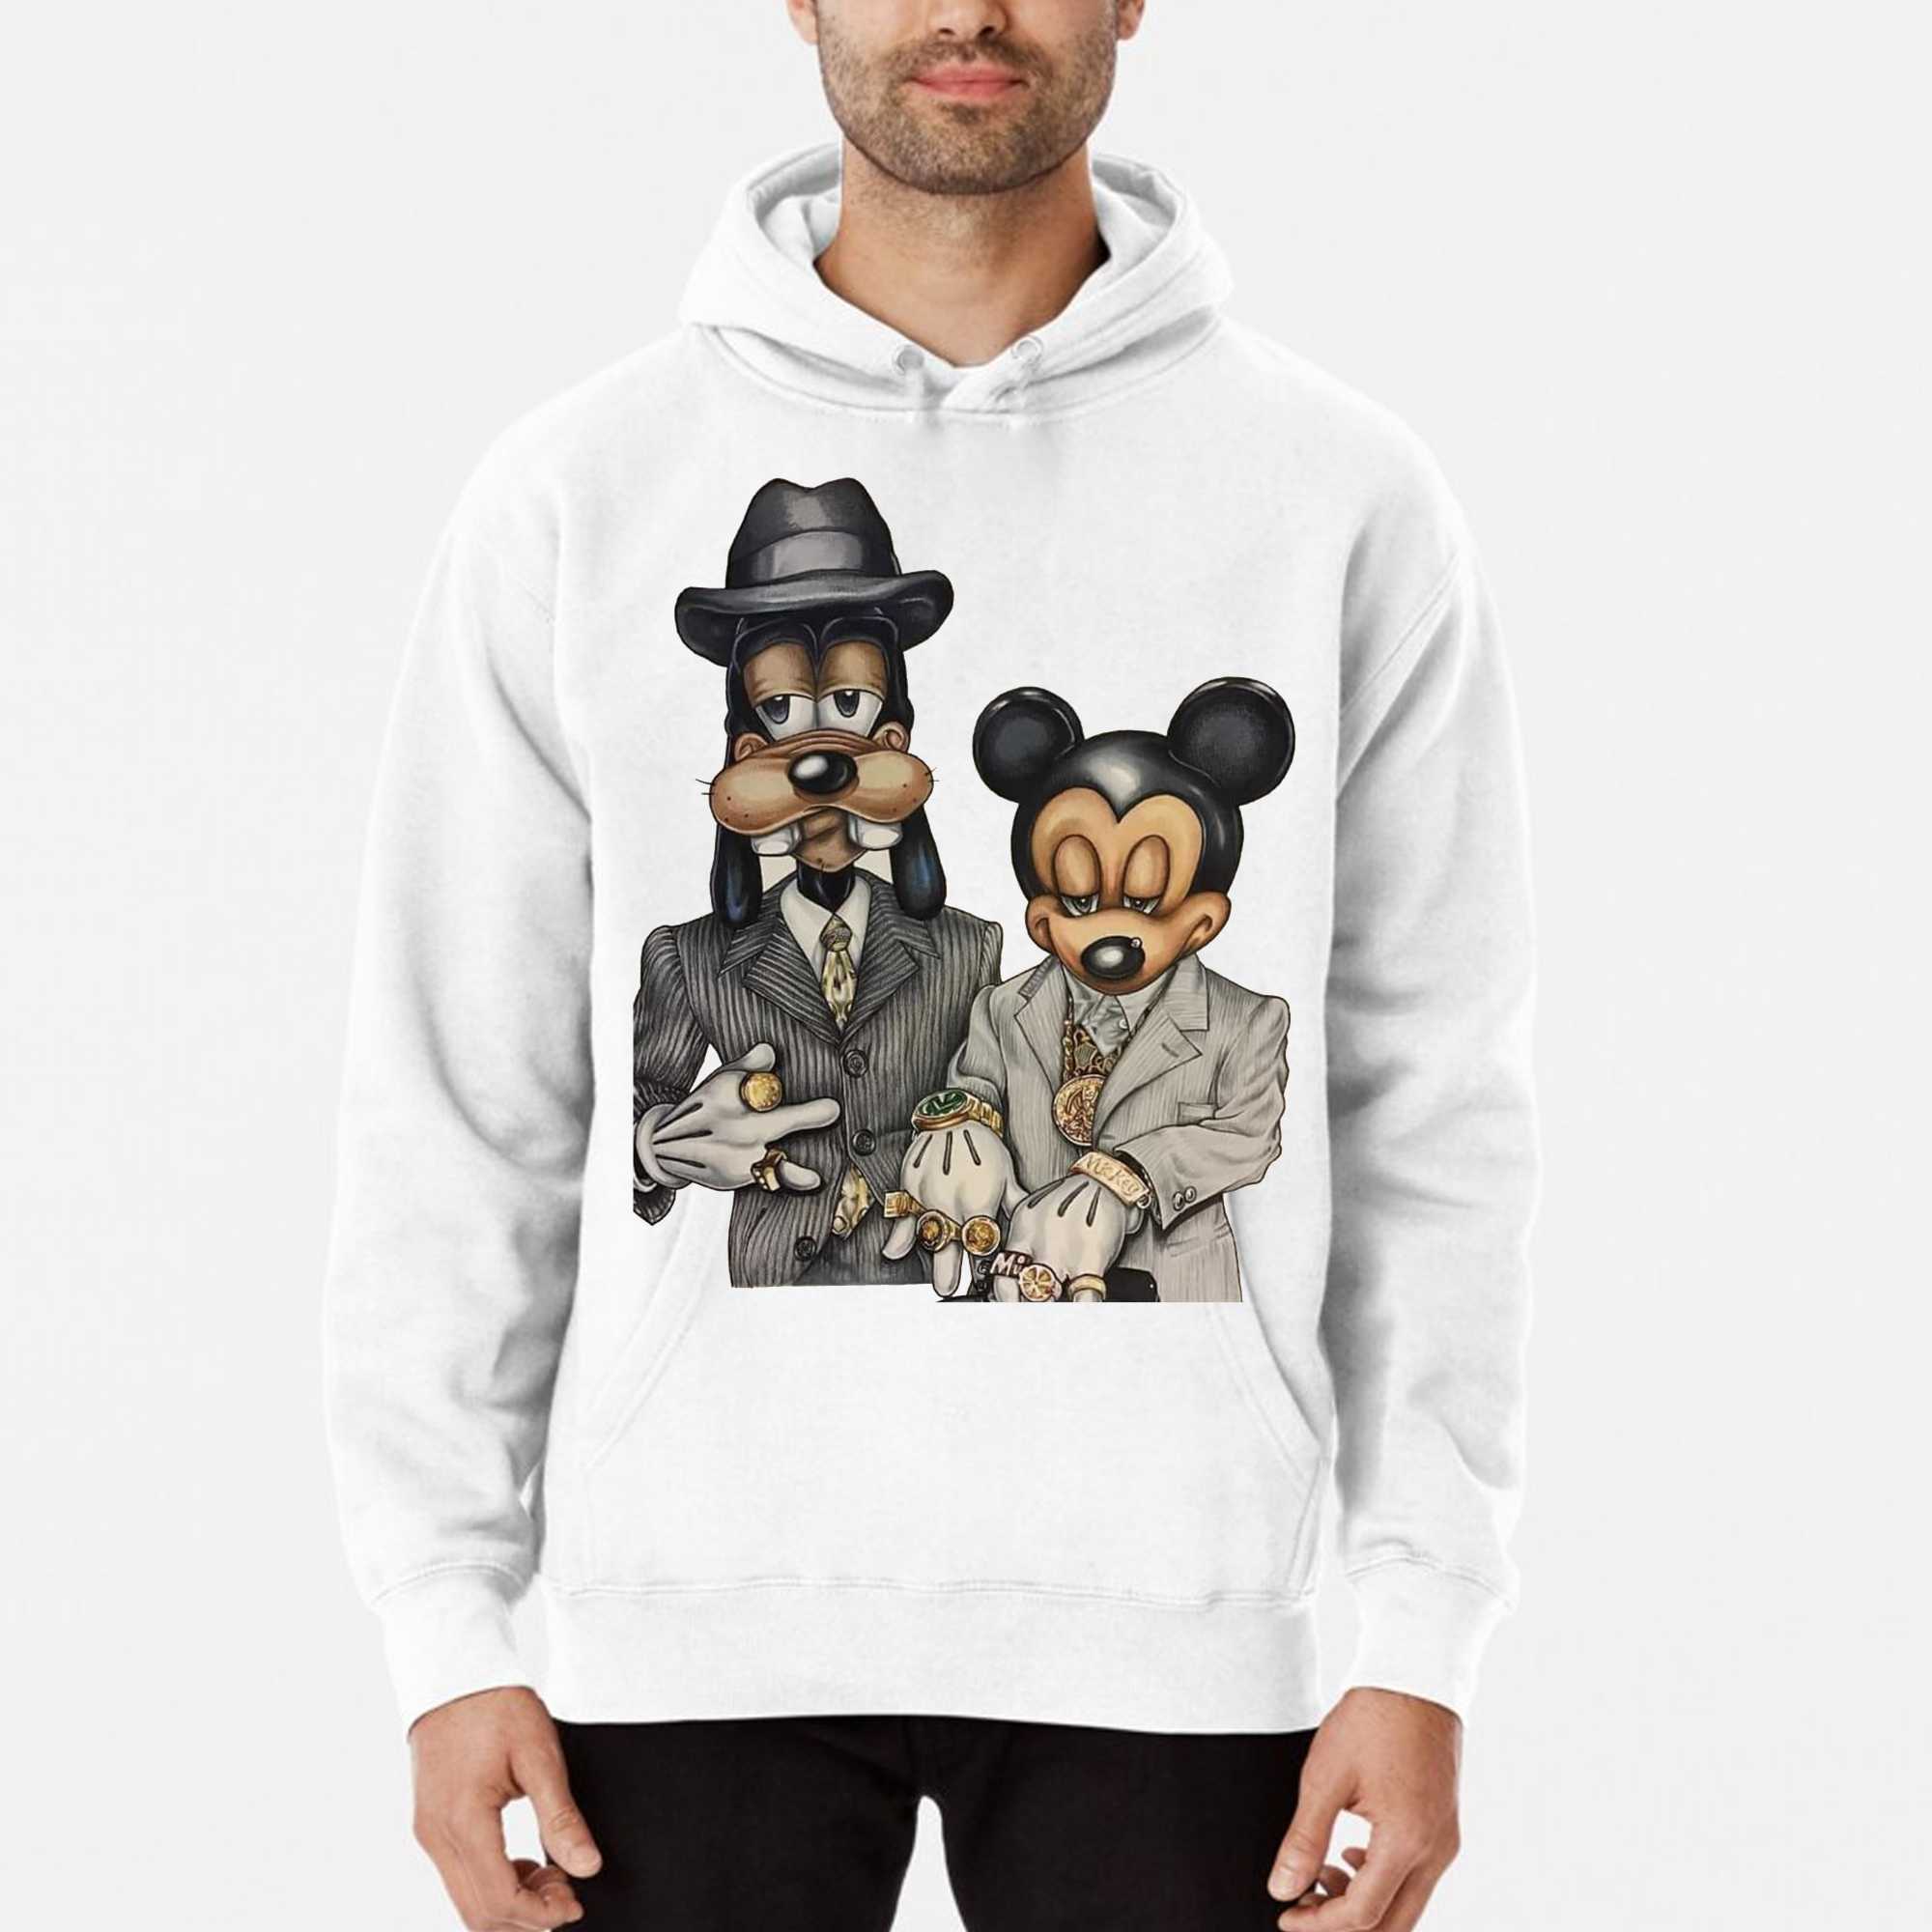 Moti Collection (Goofy) - mens tshirt, lower, hoodies, tracksuit